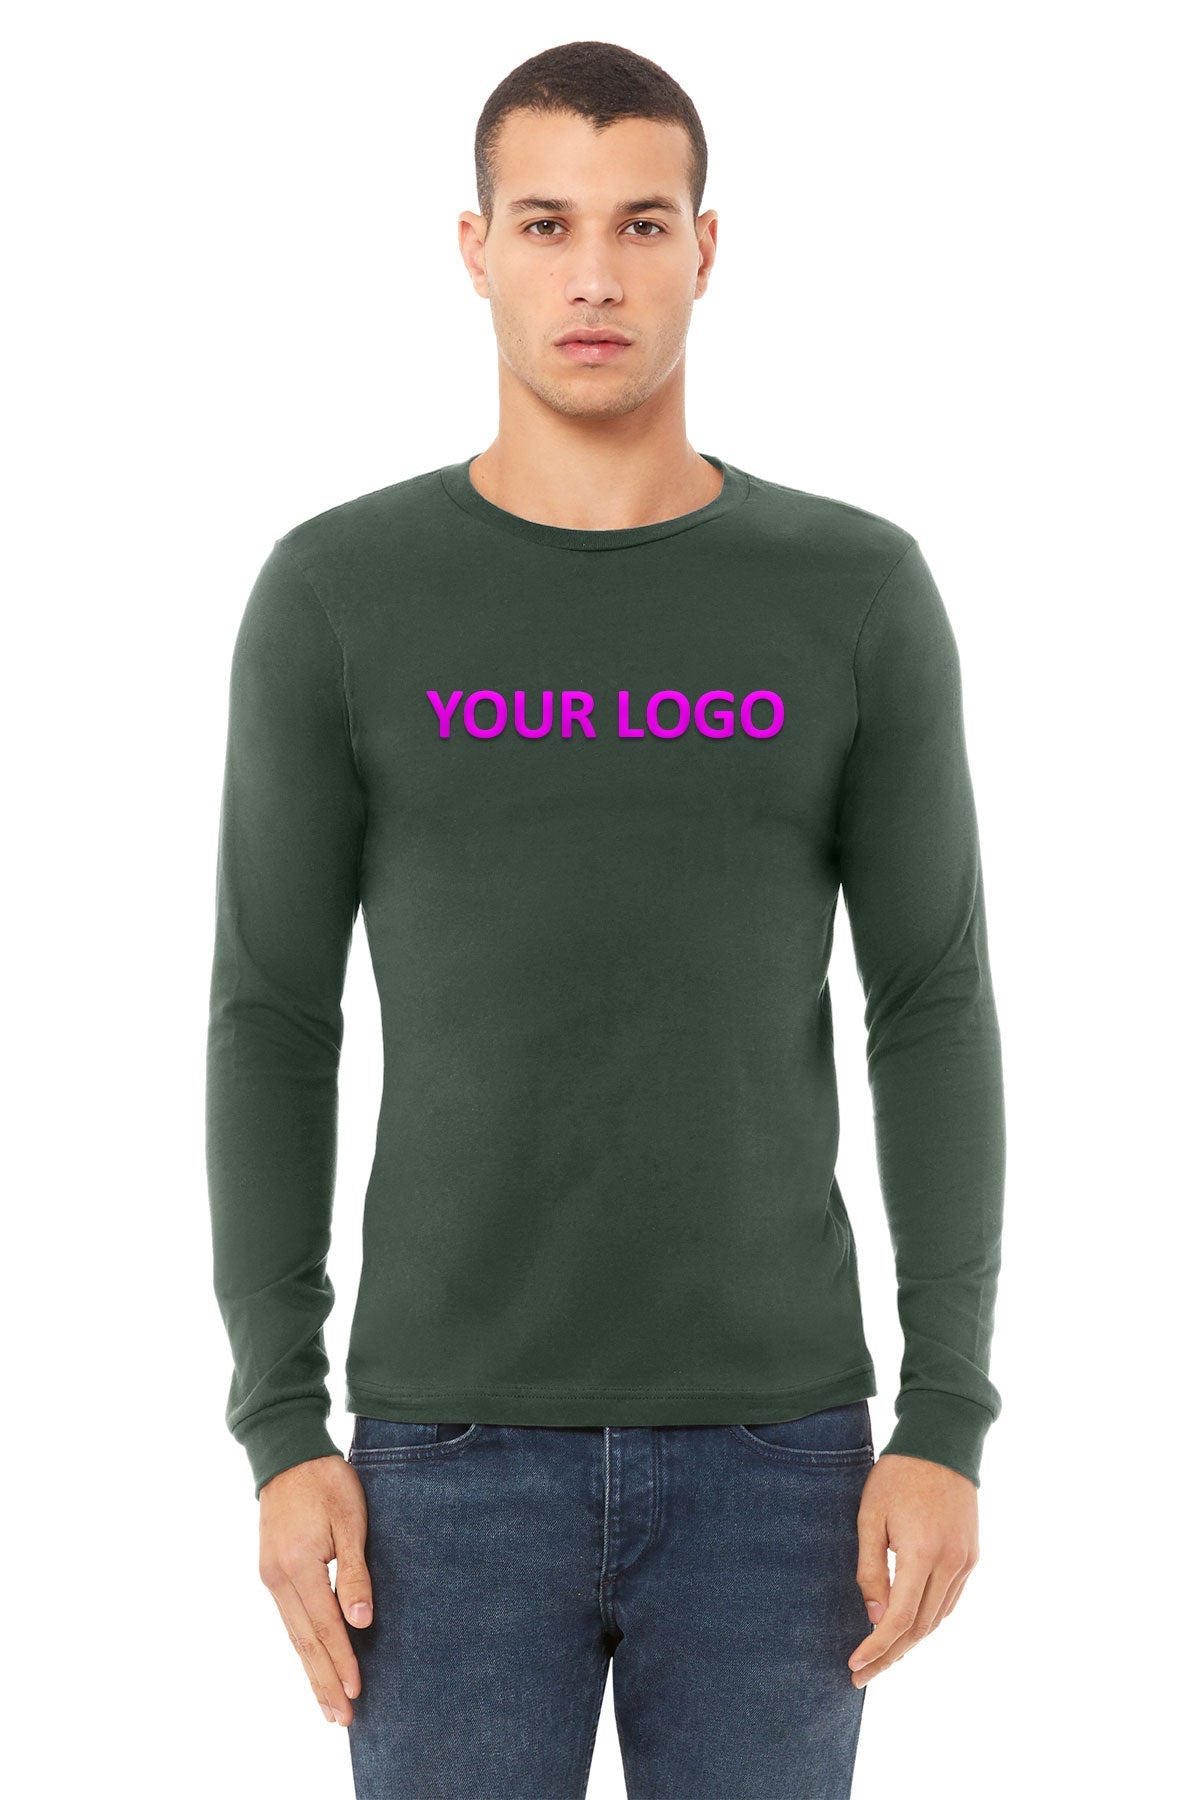 bella + canvas unisex jersey long sleeve t-shirt 3501 military green